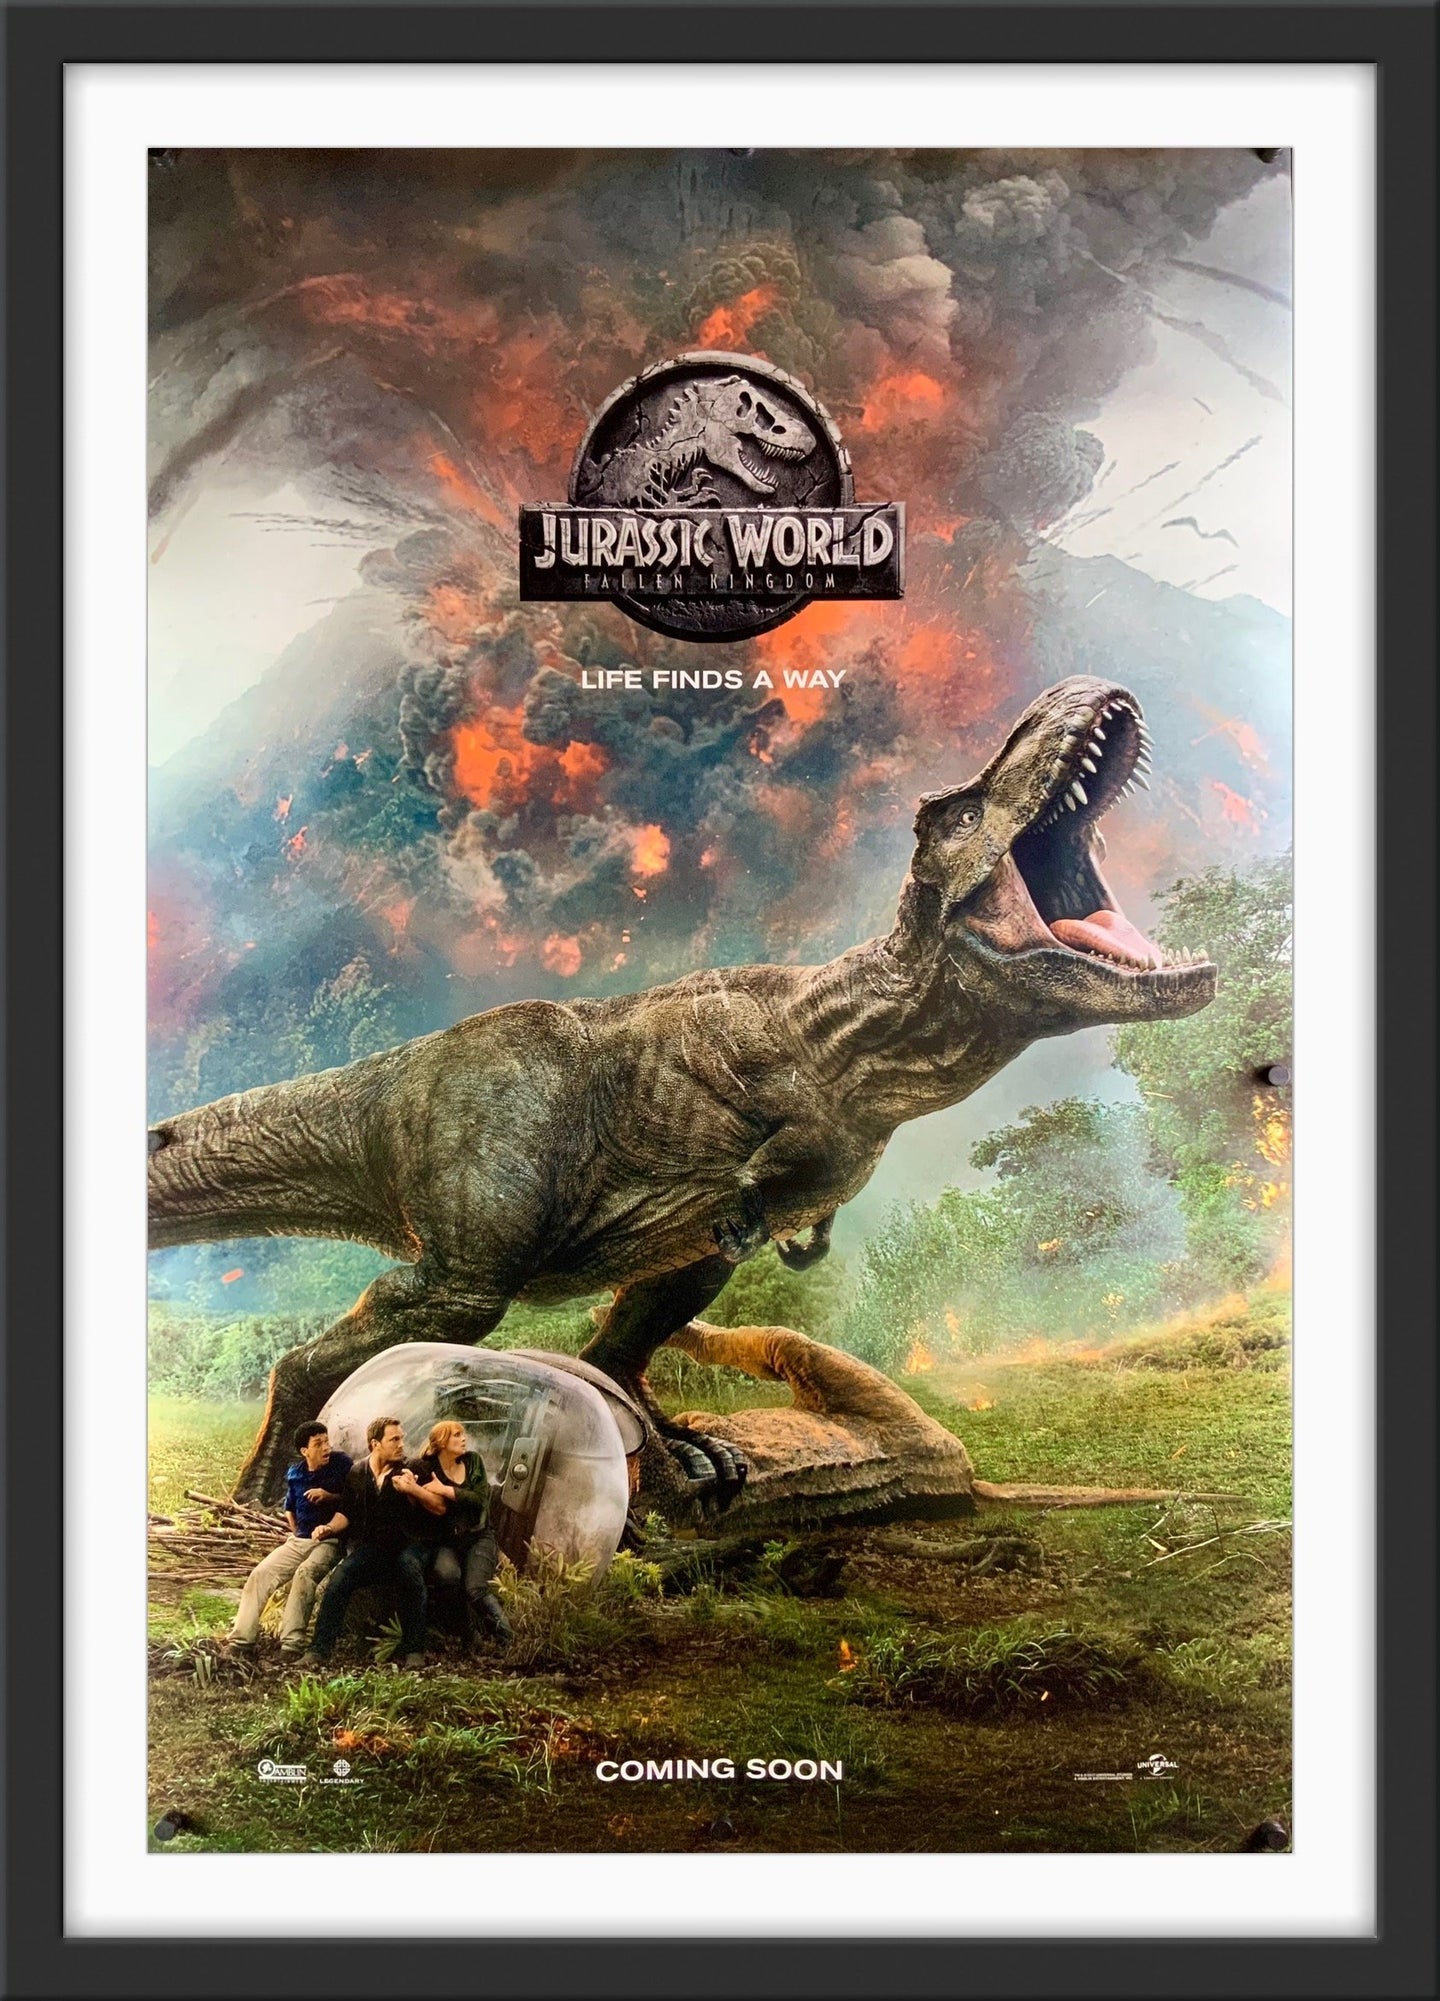 An original movie poster for the film Jurassic World: Fallen Kingdom